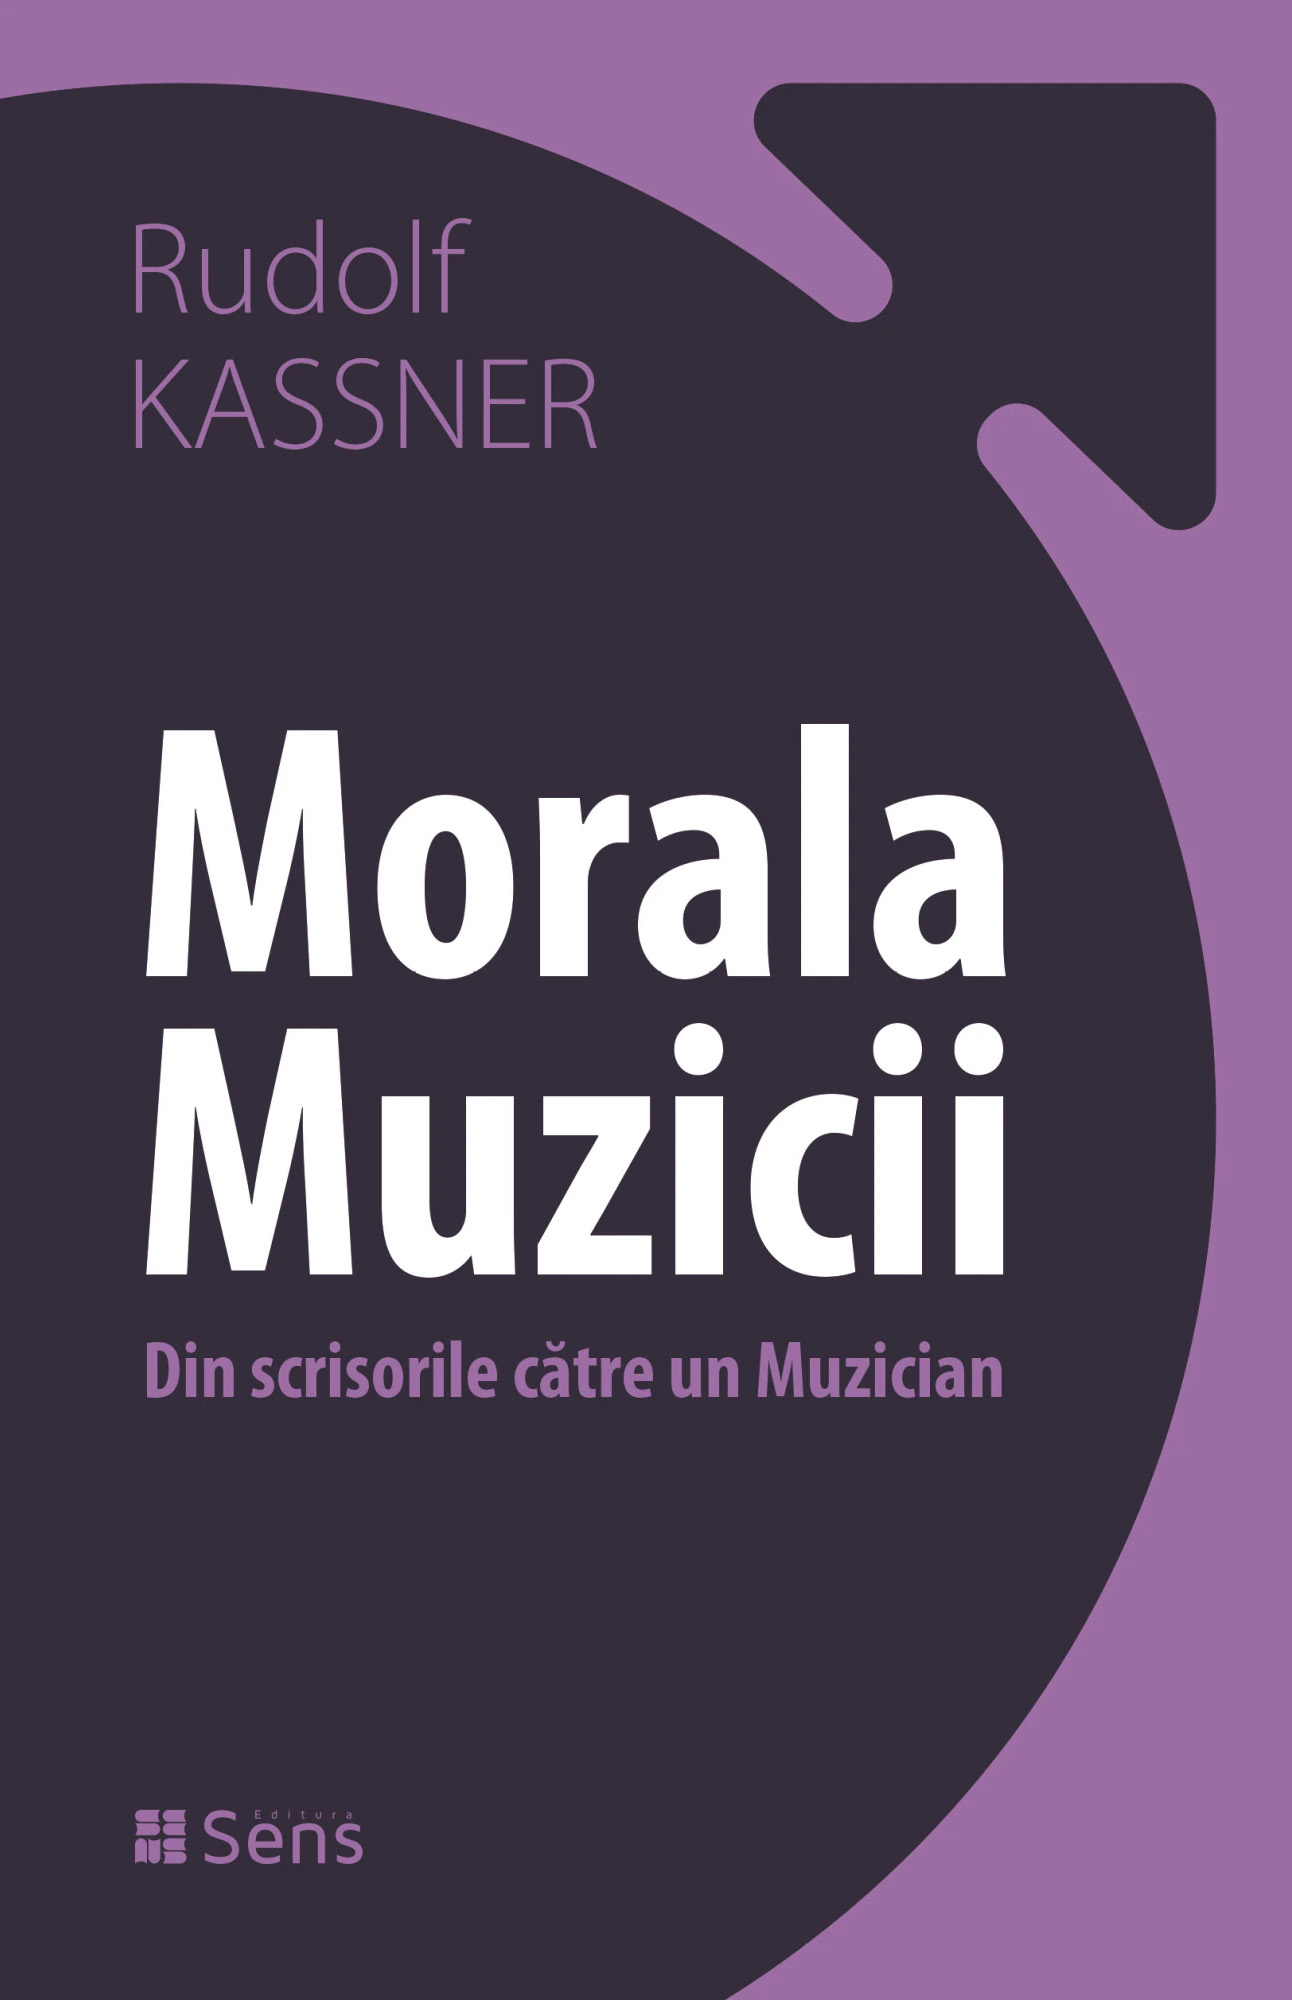 Morala Muzicii | Rudolf Kassner